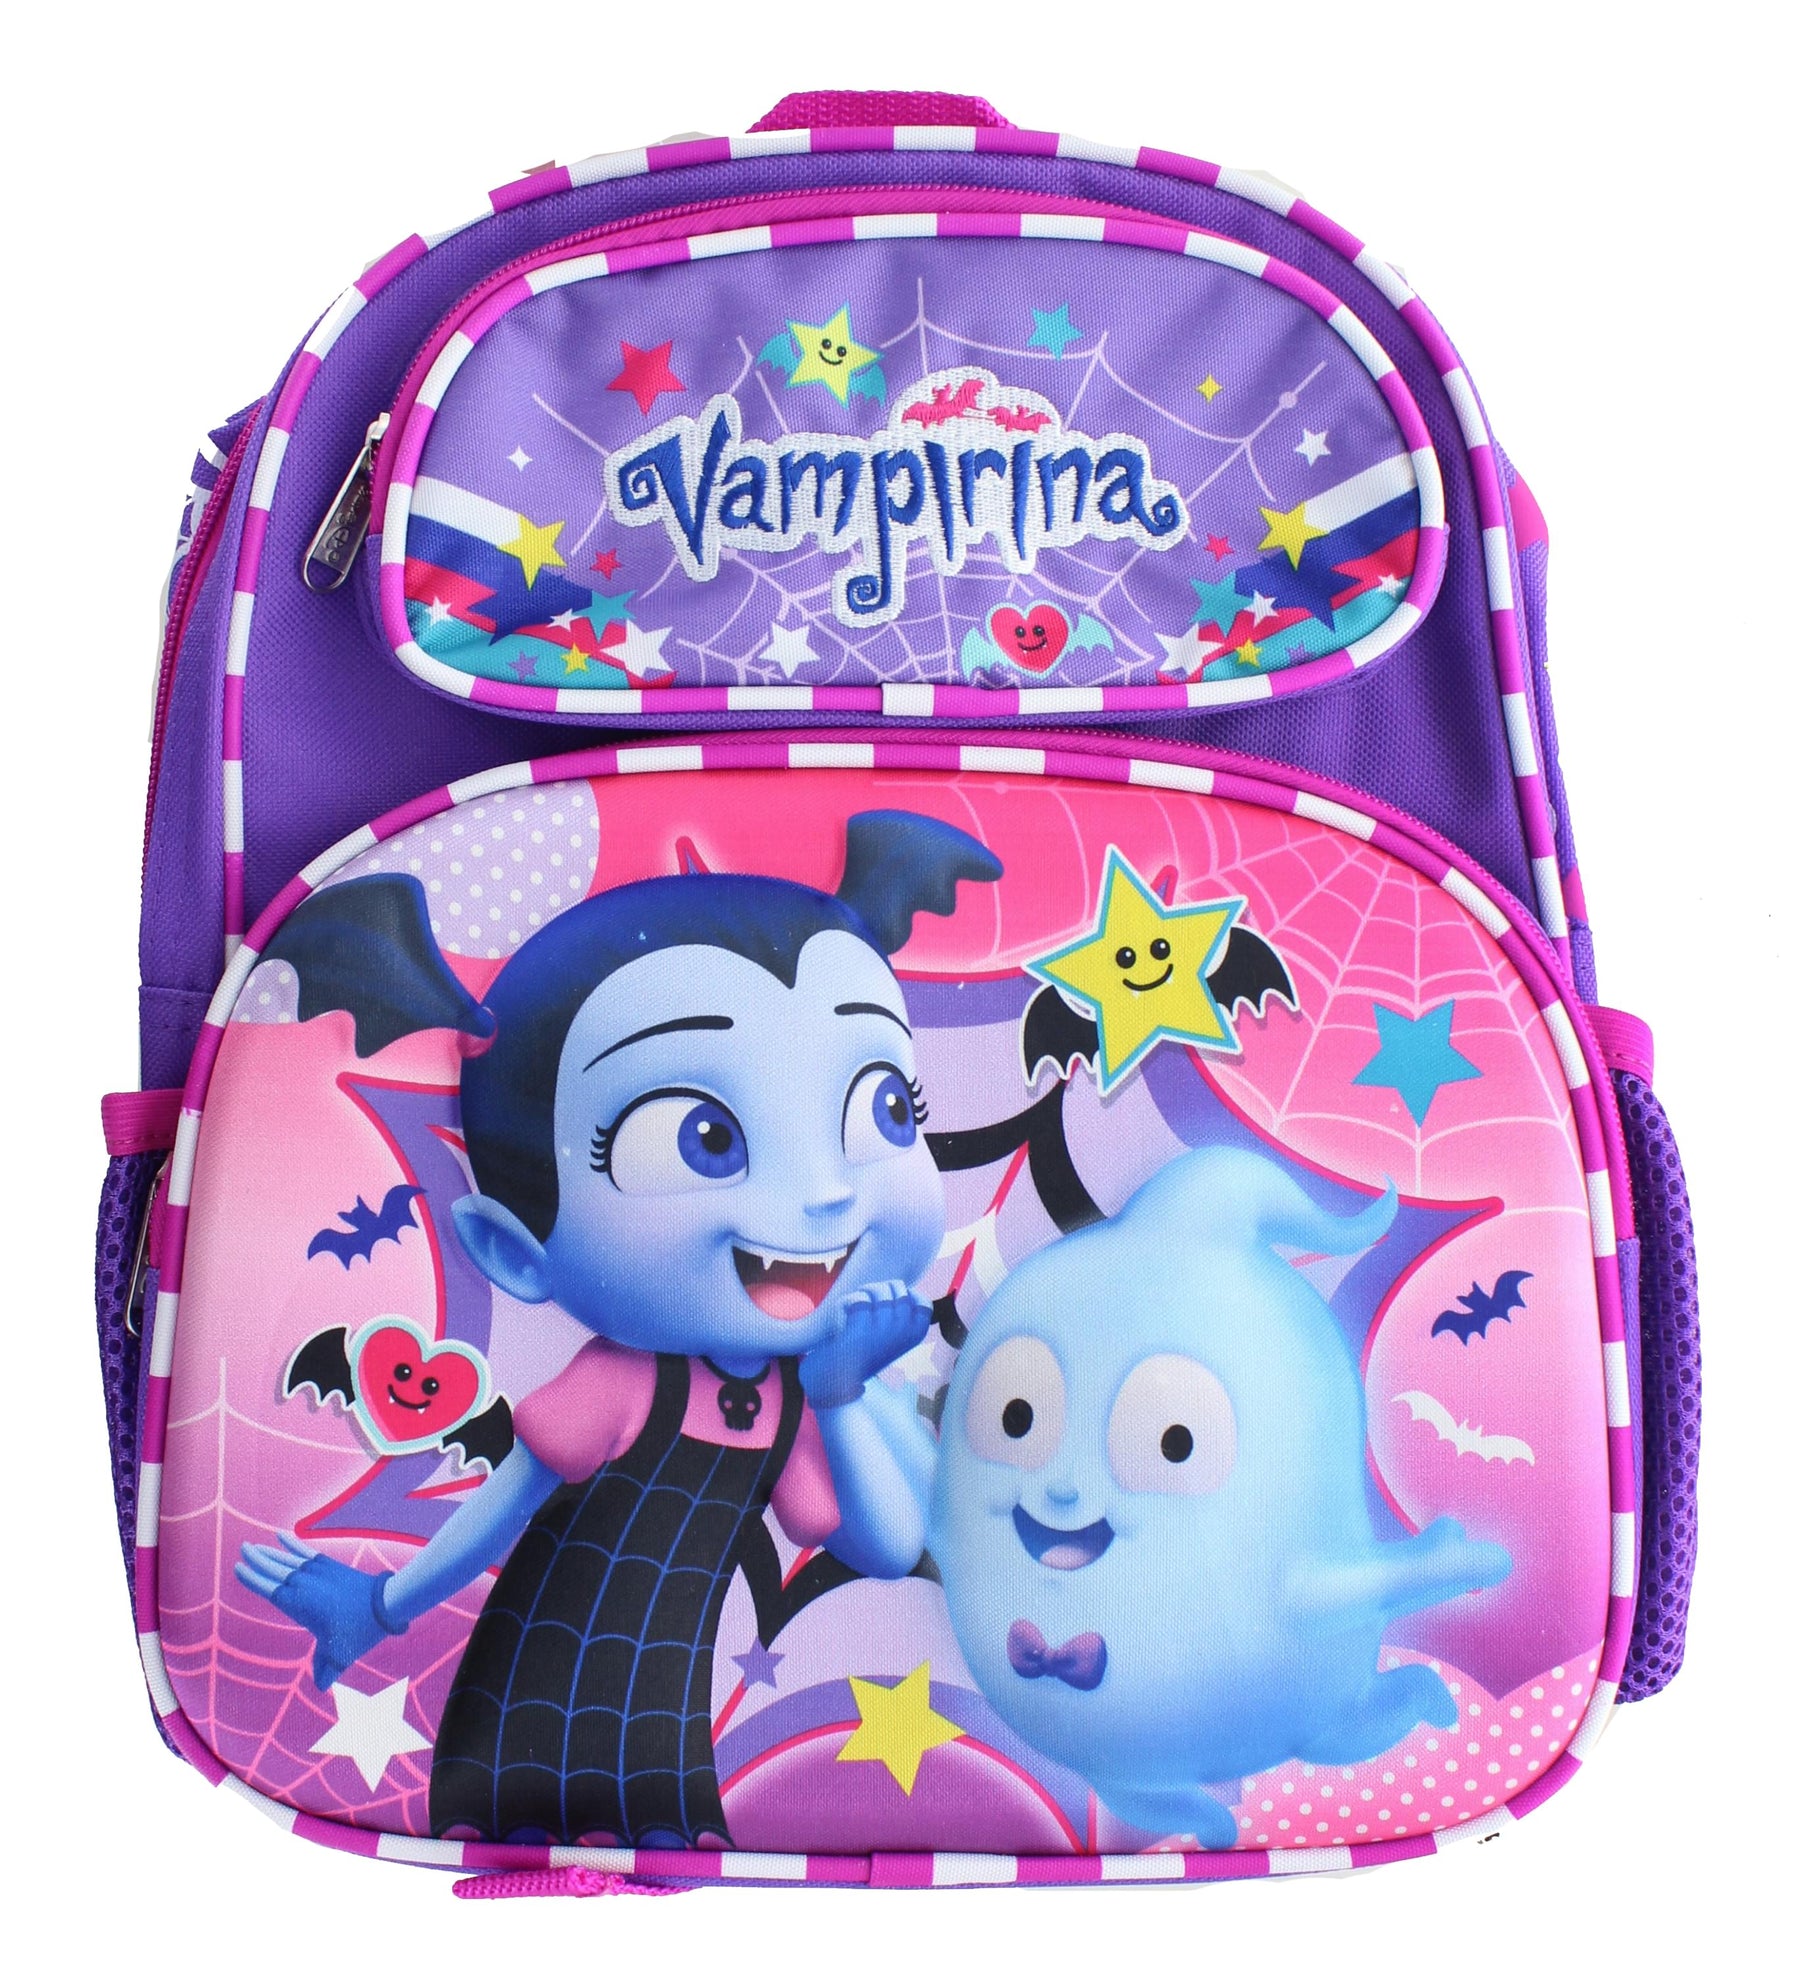 Vampirina 3D 12 Inch Backpack